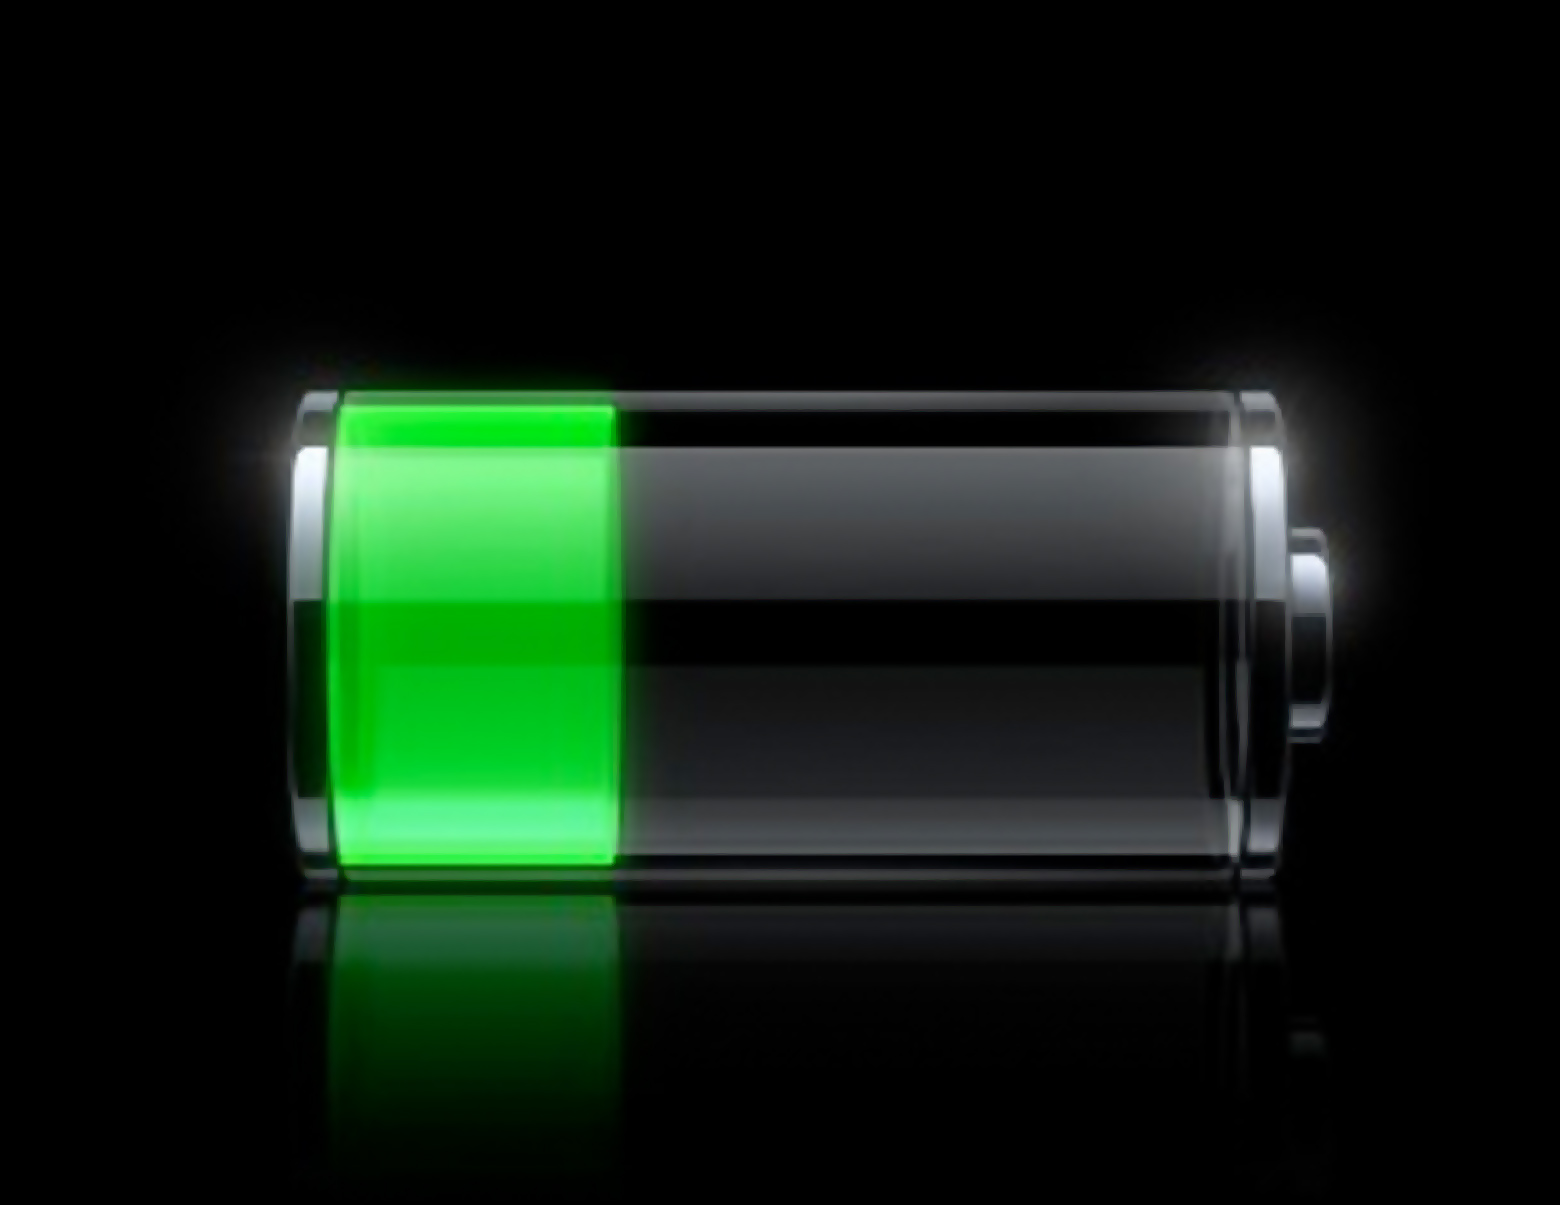 Battery 3. Заряд батареи. Зарядка батареи. Индикатор зарядки телефона. Зарядка батареи телефона.